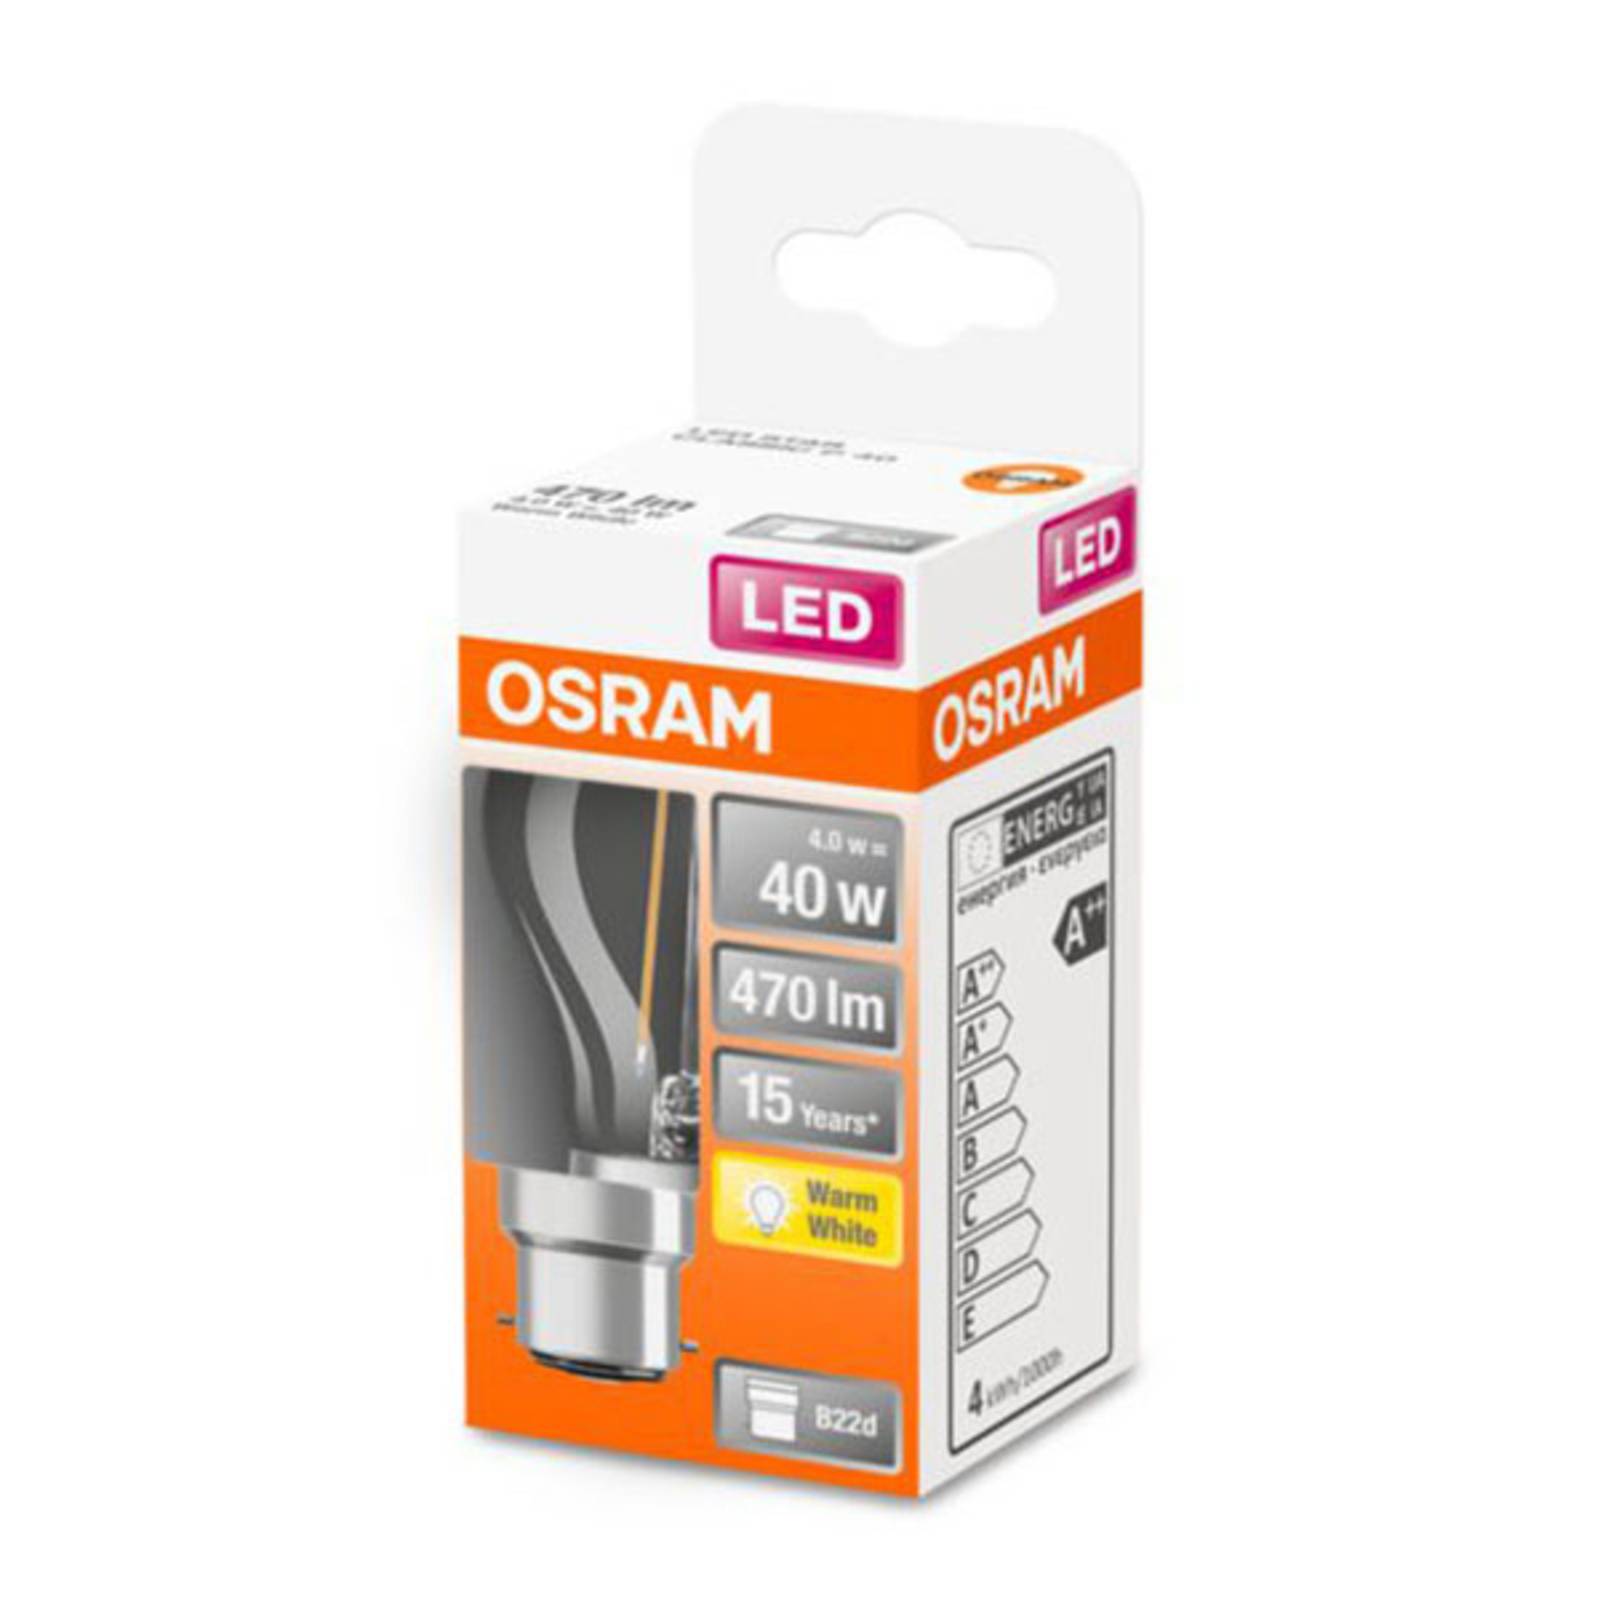 OSRAM Kapková LED žárovka OSRAM B22d 4W 2 700K čirá